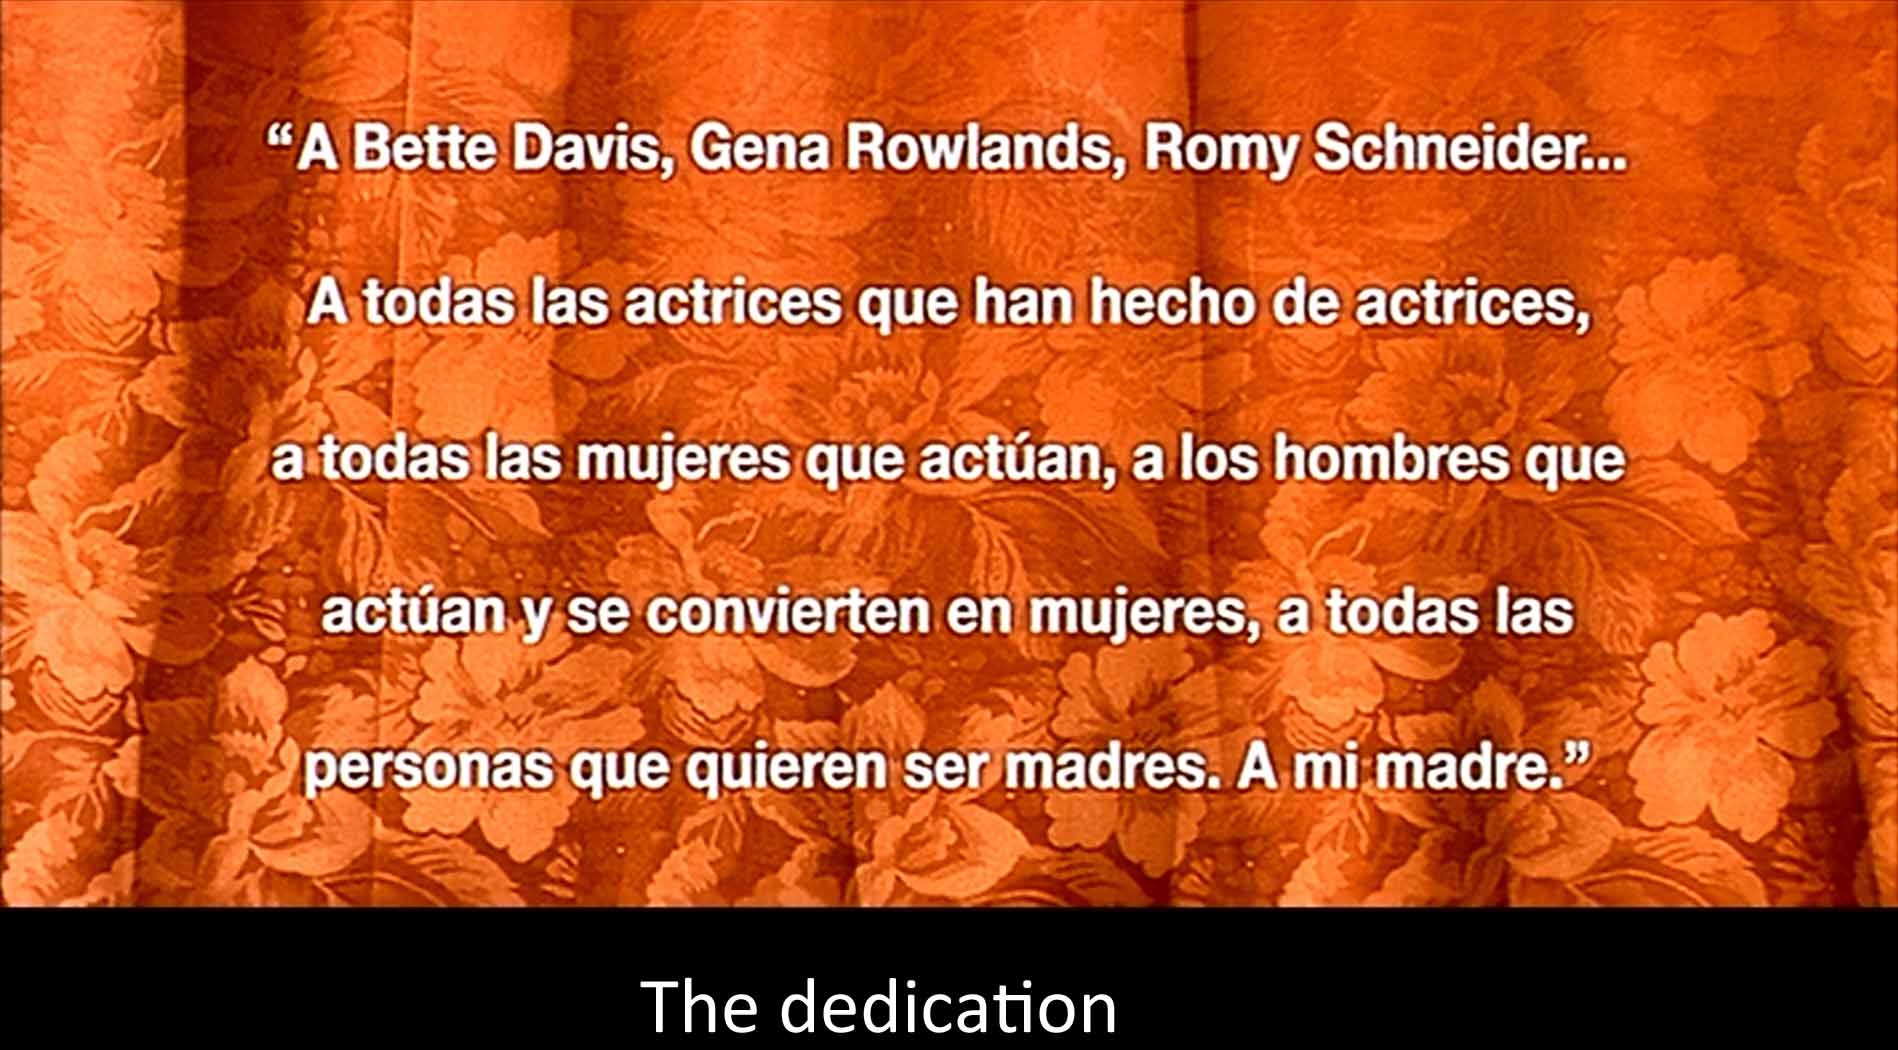 The dedication